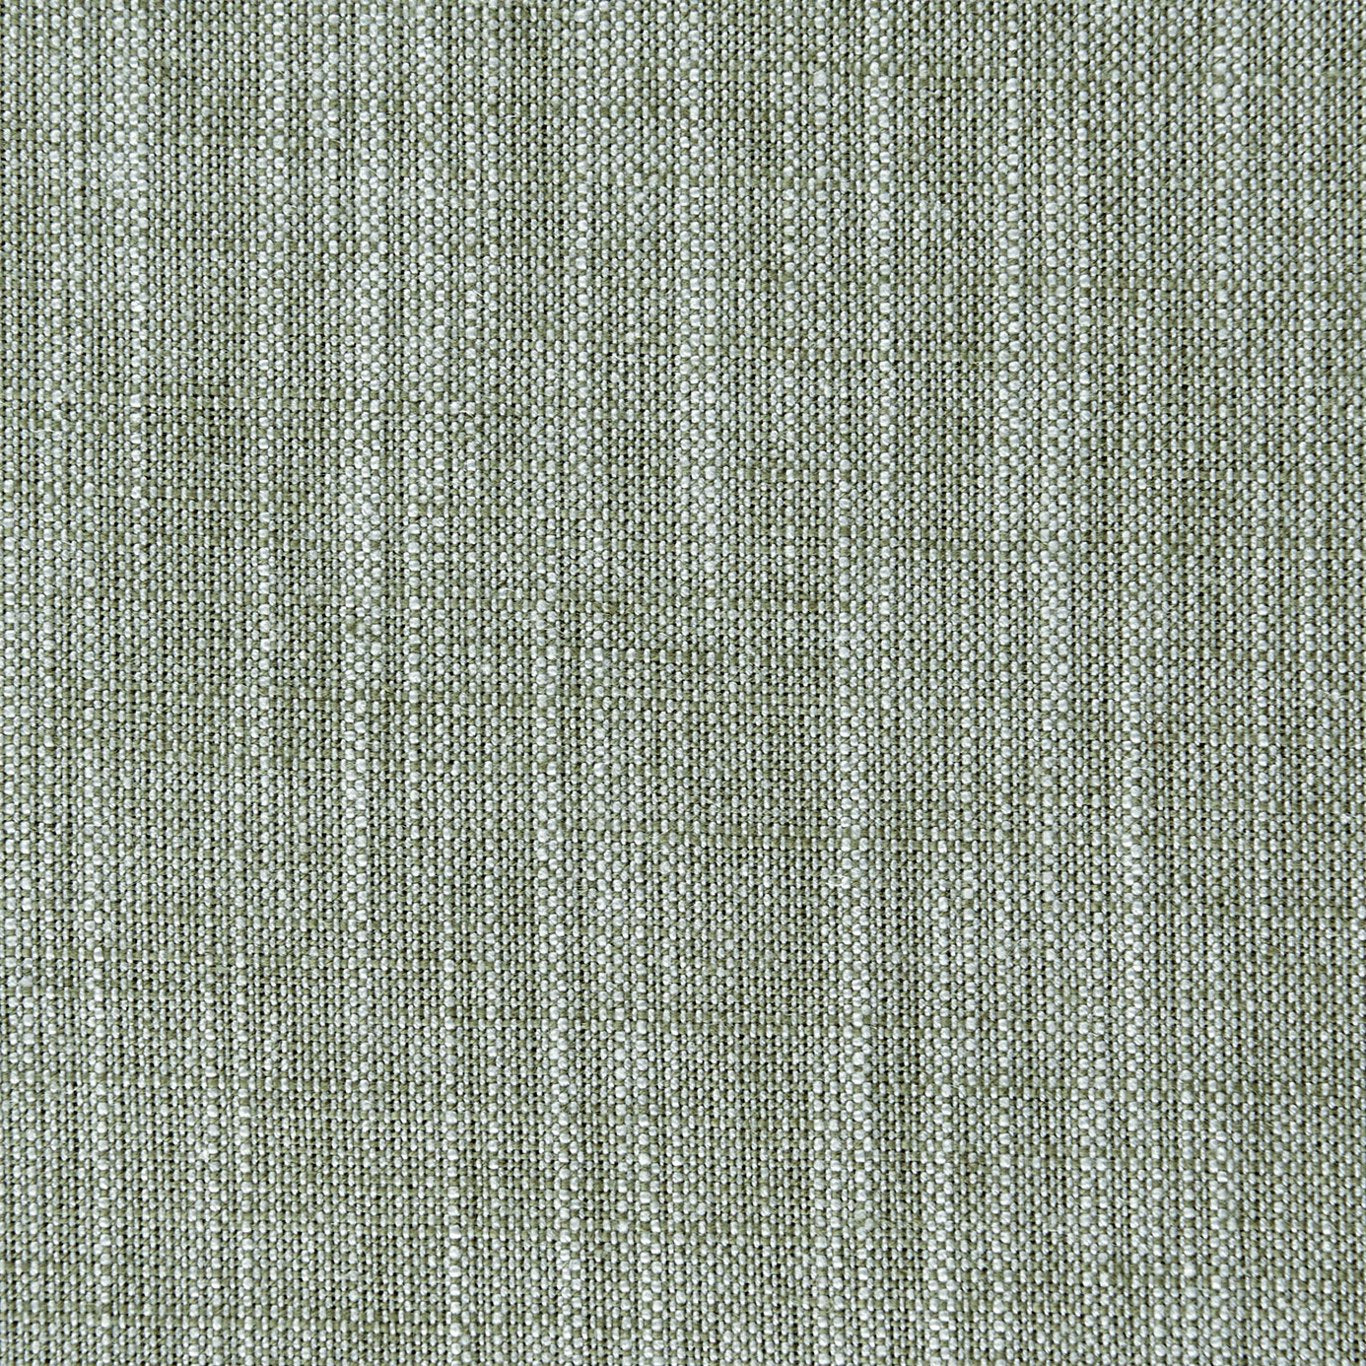 Biarritz Fabric by Clarke & Clarke - F0965/30 - Moss